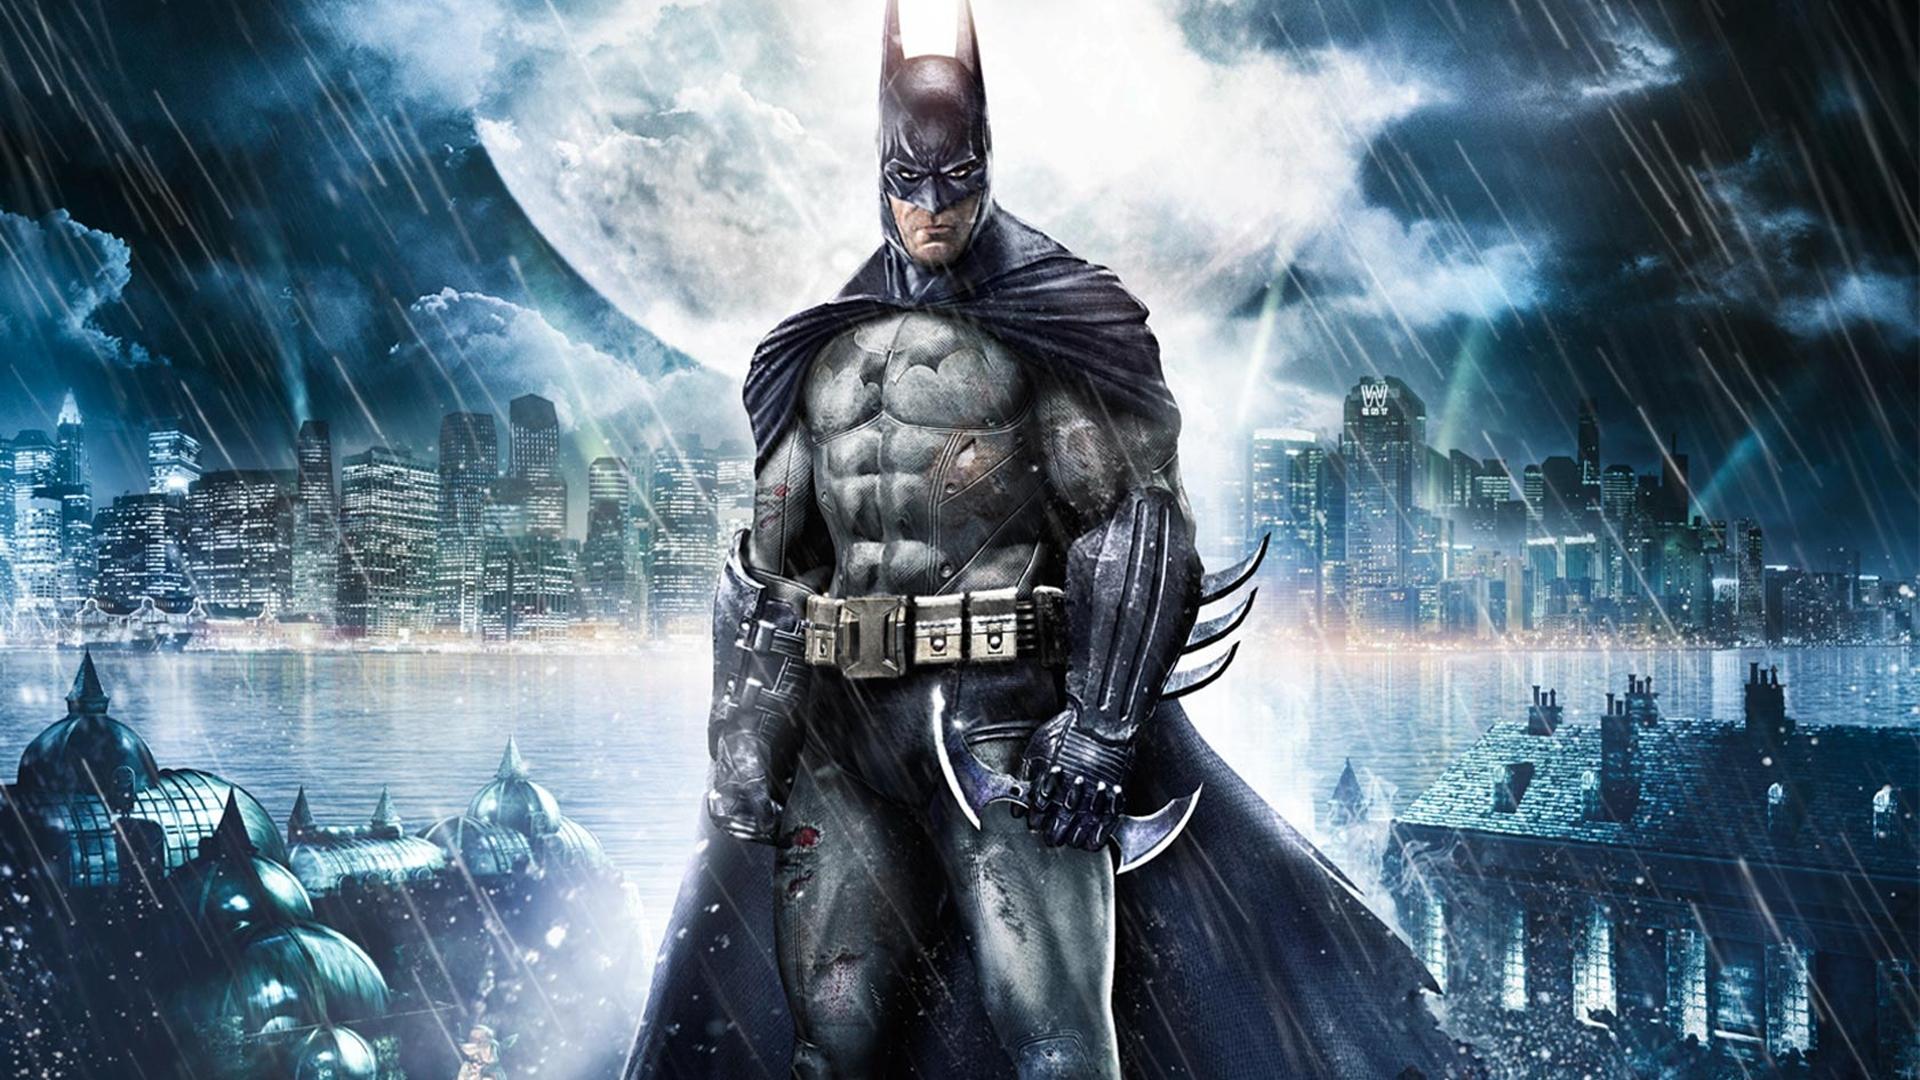 Wallpaper ID 422445  Video Game Batman Arkham Knight Phone Wallpaper  Batman 828x1792 free download